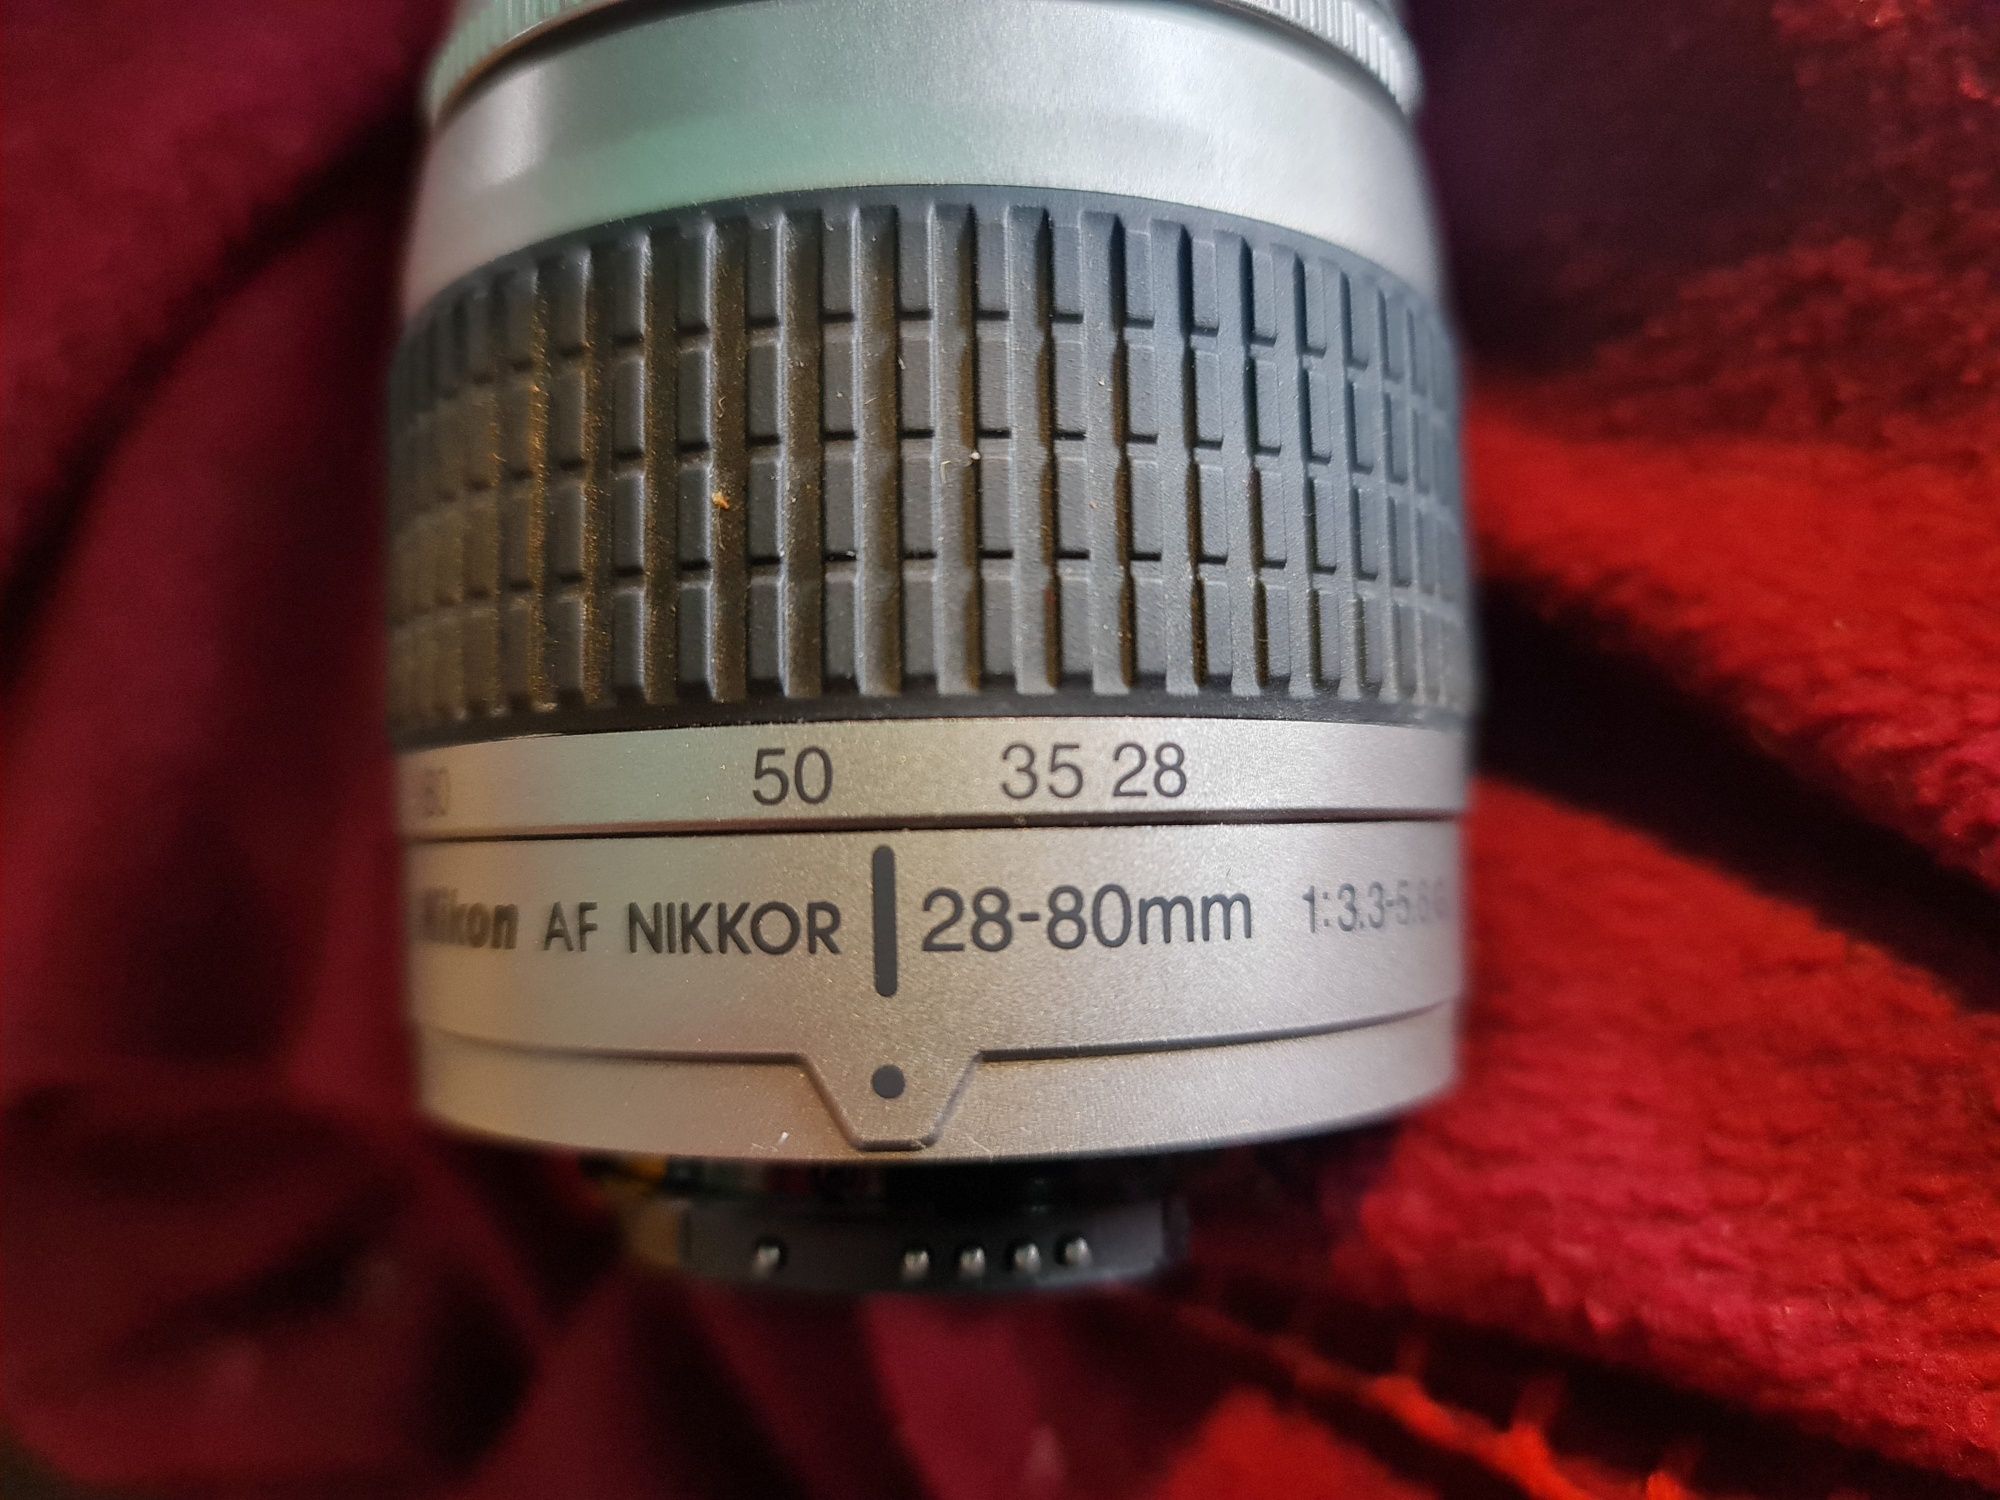 Nikon F55 nikkor 28-80mm 1.33